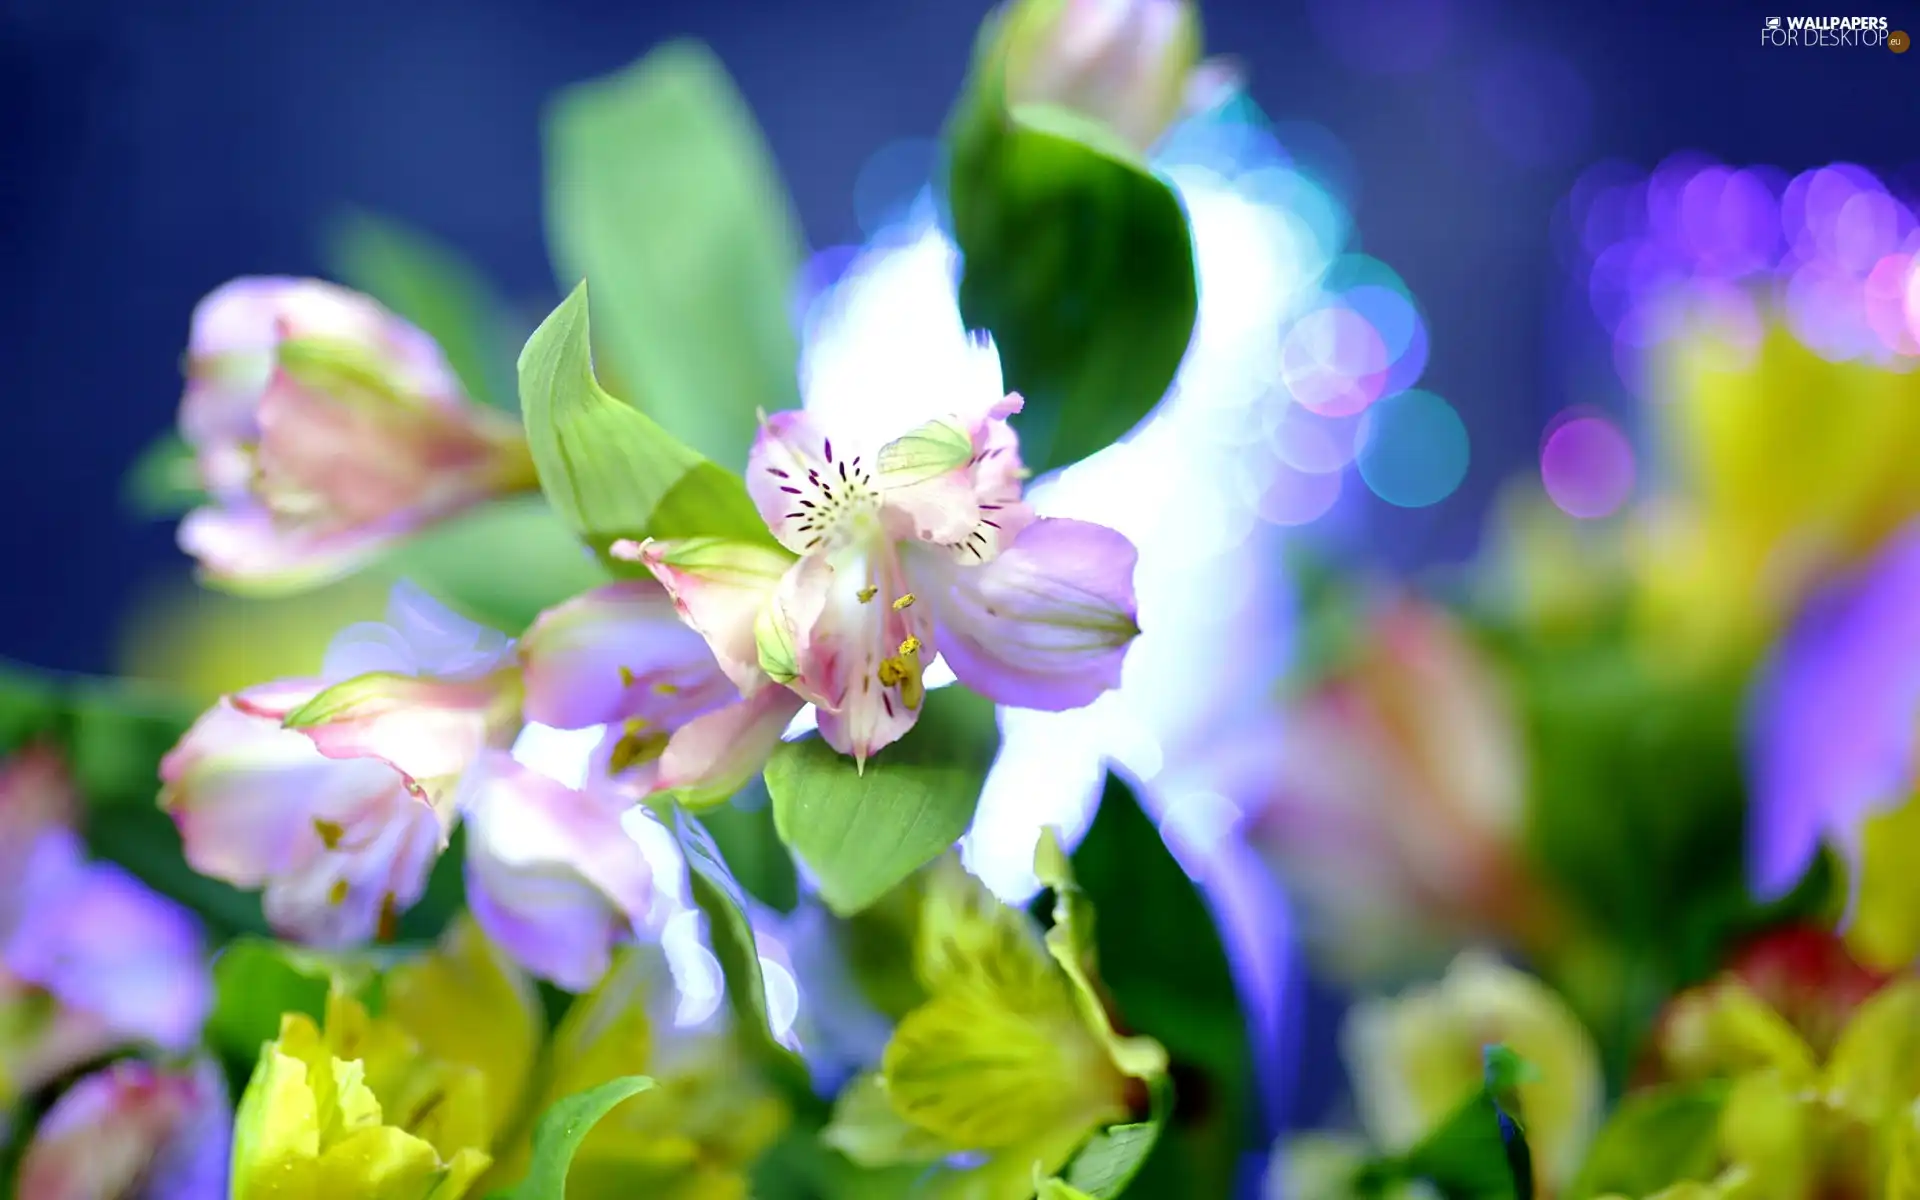 Flowers, Close, blur, Alstroemeria